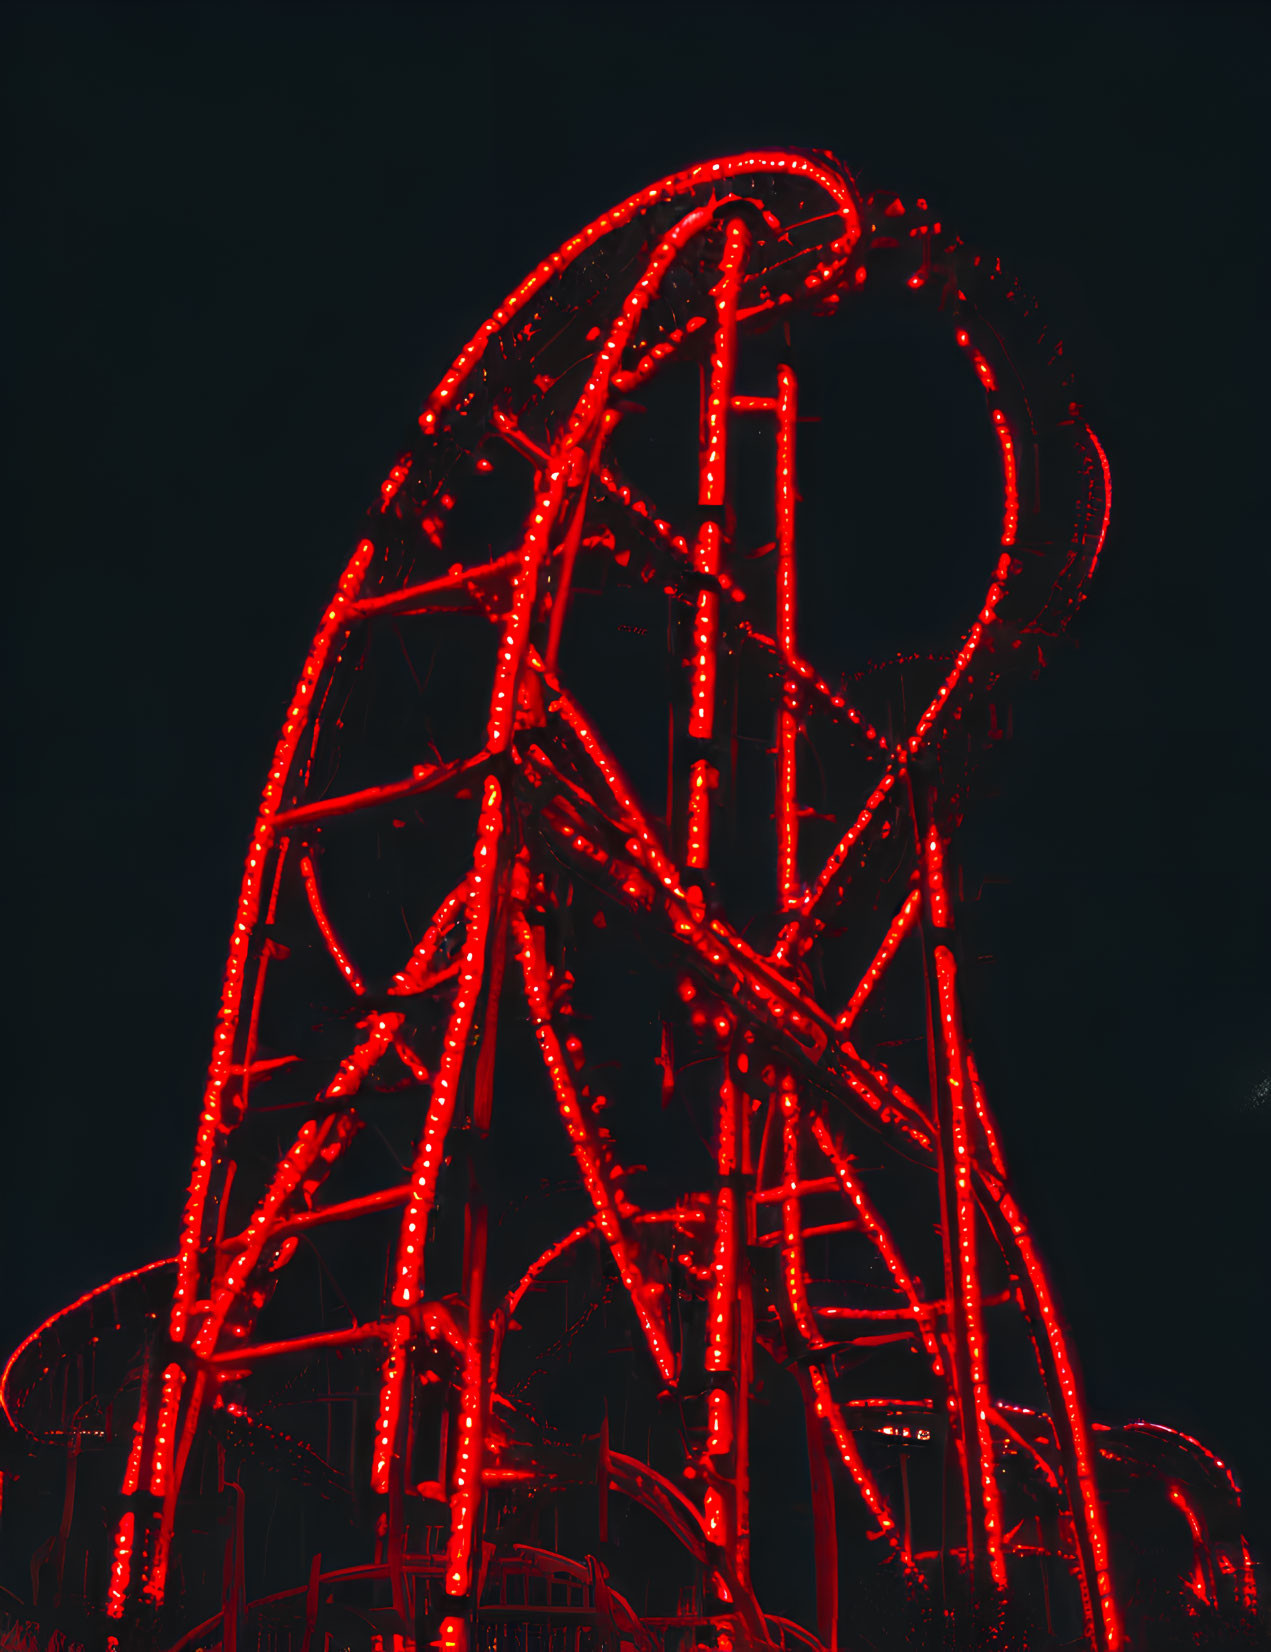 Night Sky Rollercoaster Illuminated in Red Lights